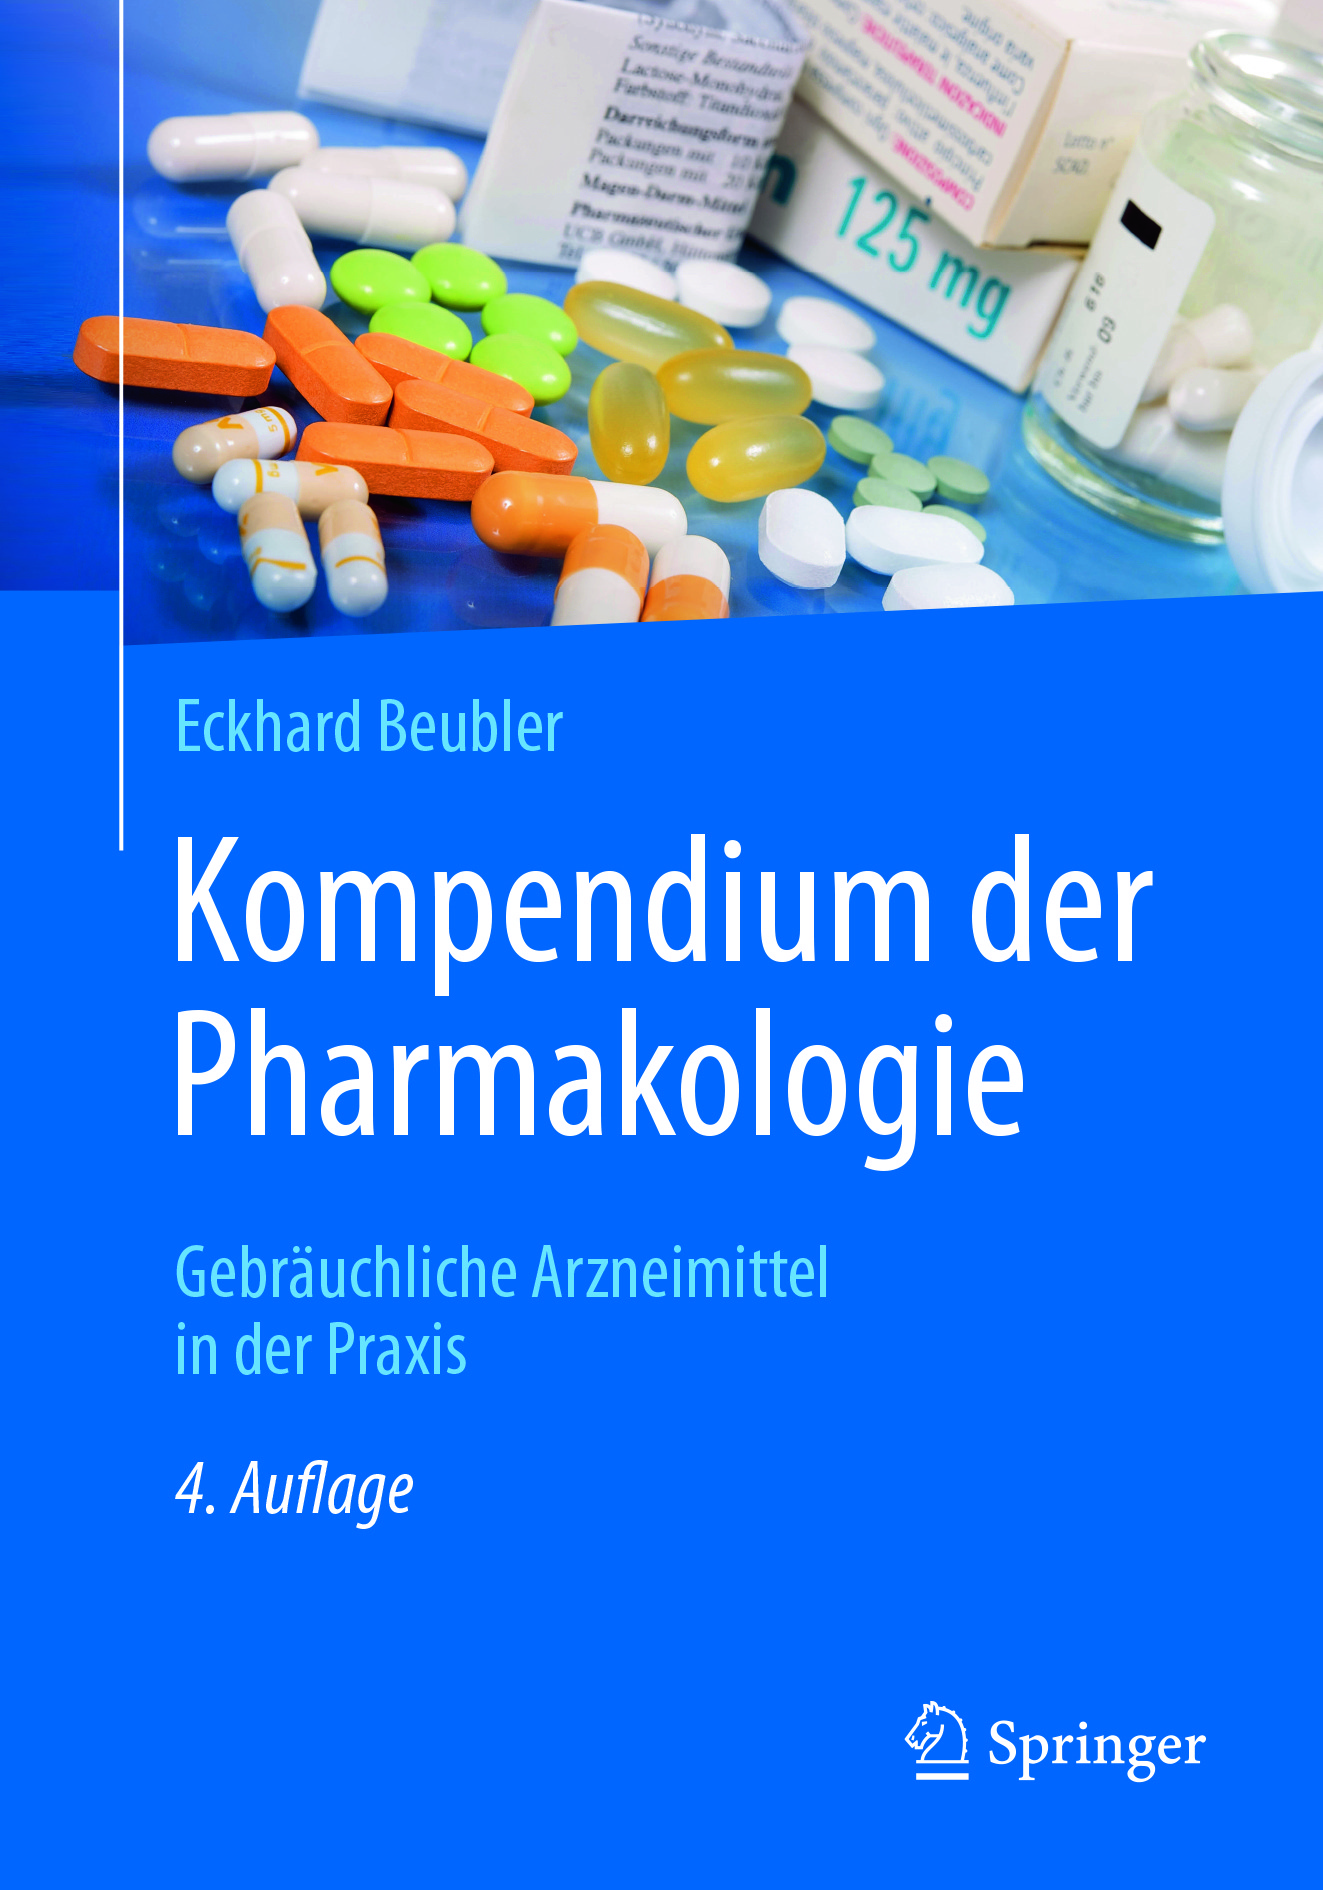 Beubler, Eckhard - Kompendium der Pharmakologie, ebook